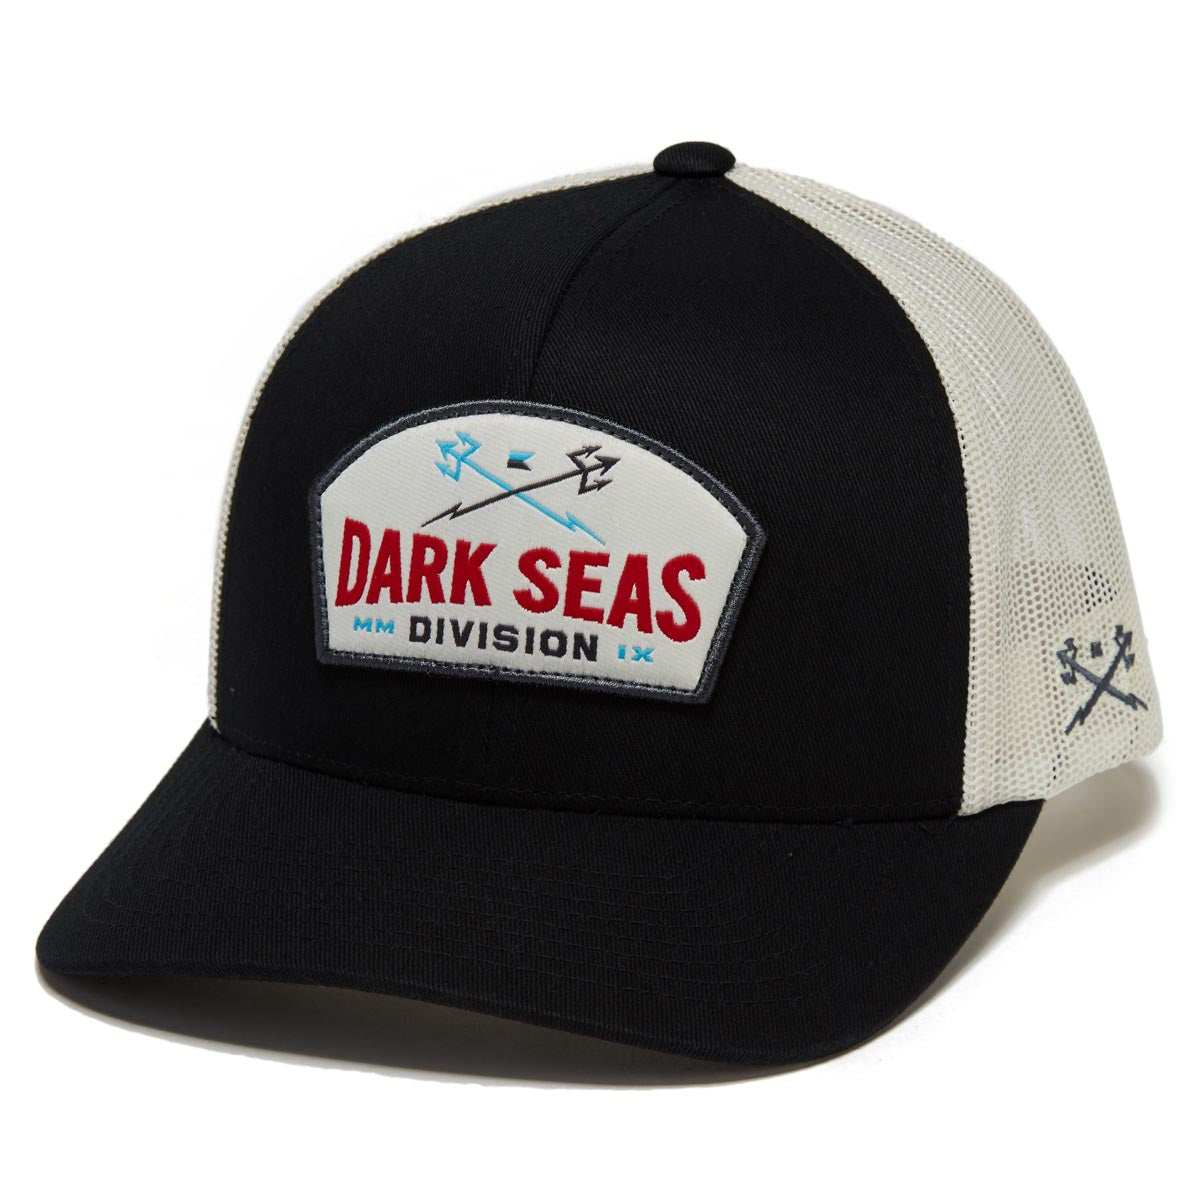 Dark Seas Prospect Hat - Black/White image 1